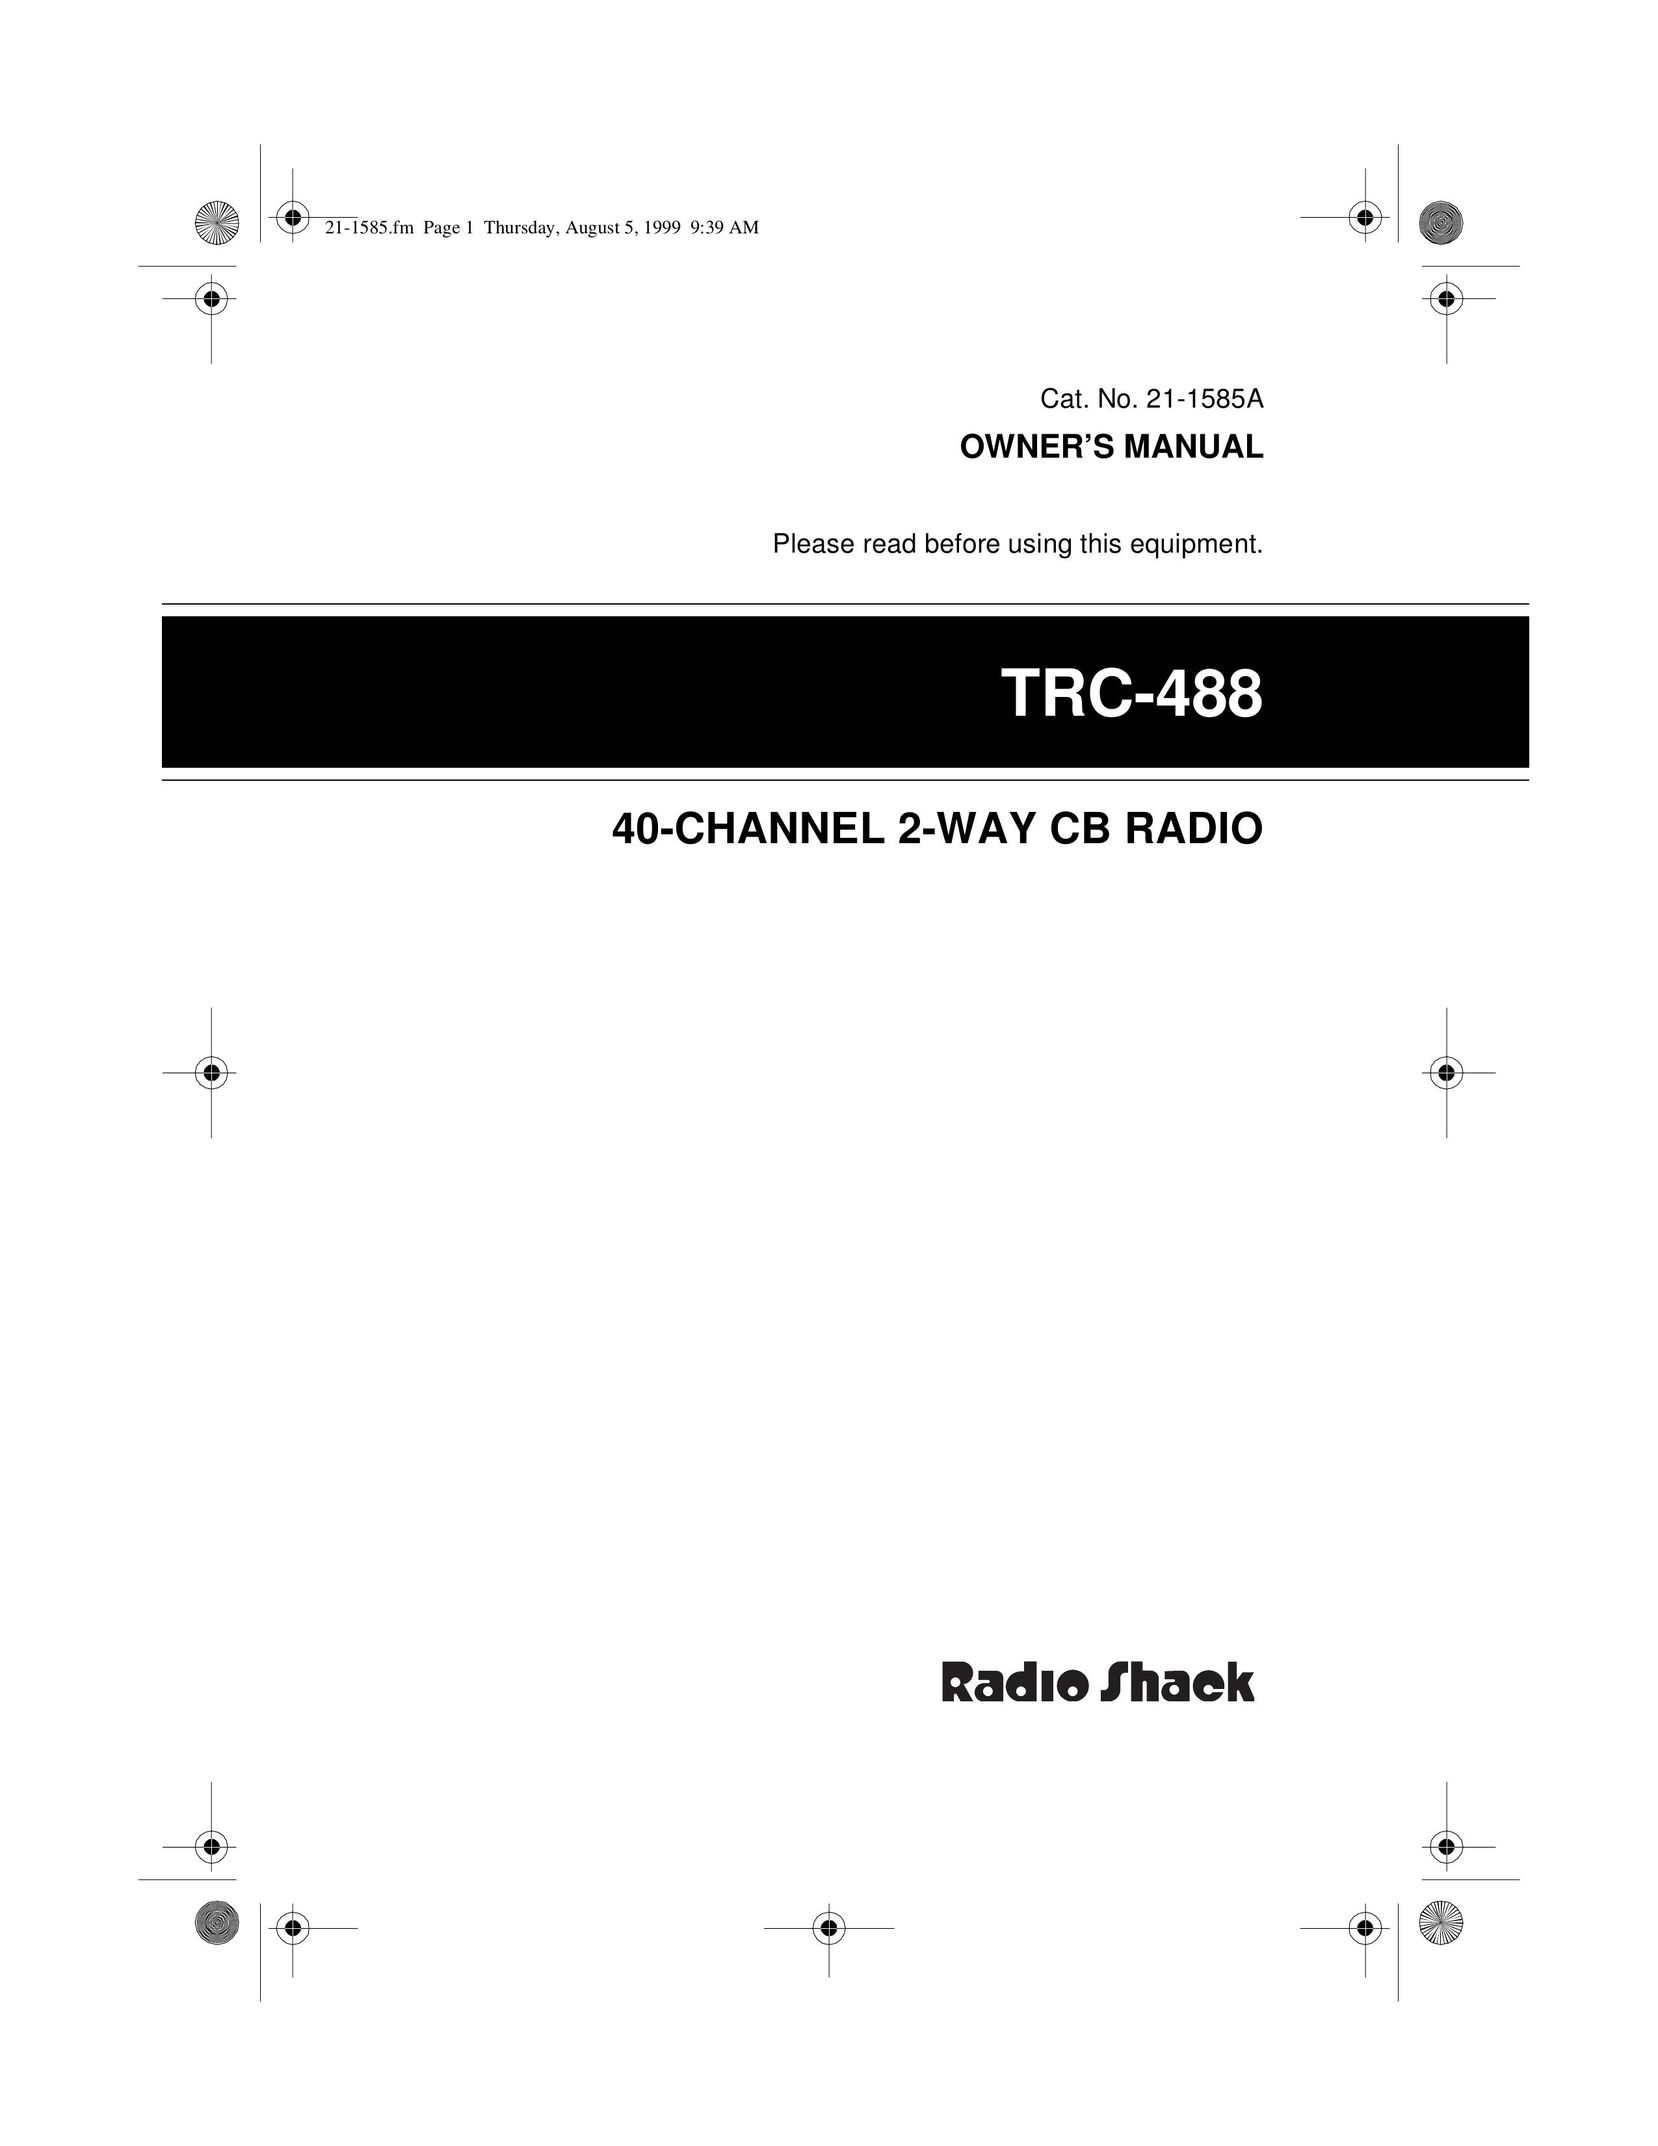 Radio Shack TRC-488 Two-Way Radio User Manual